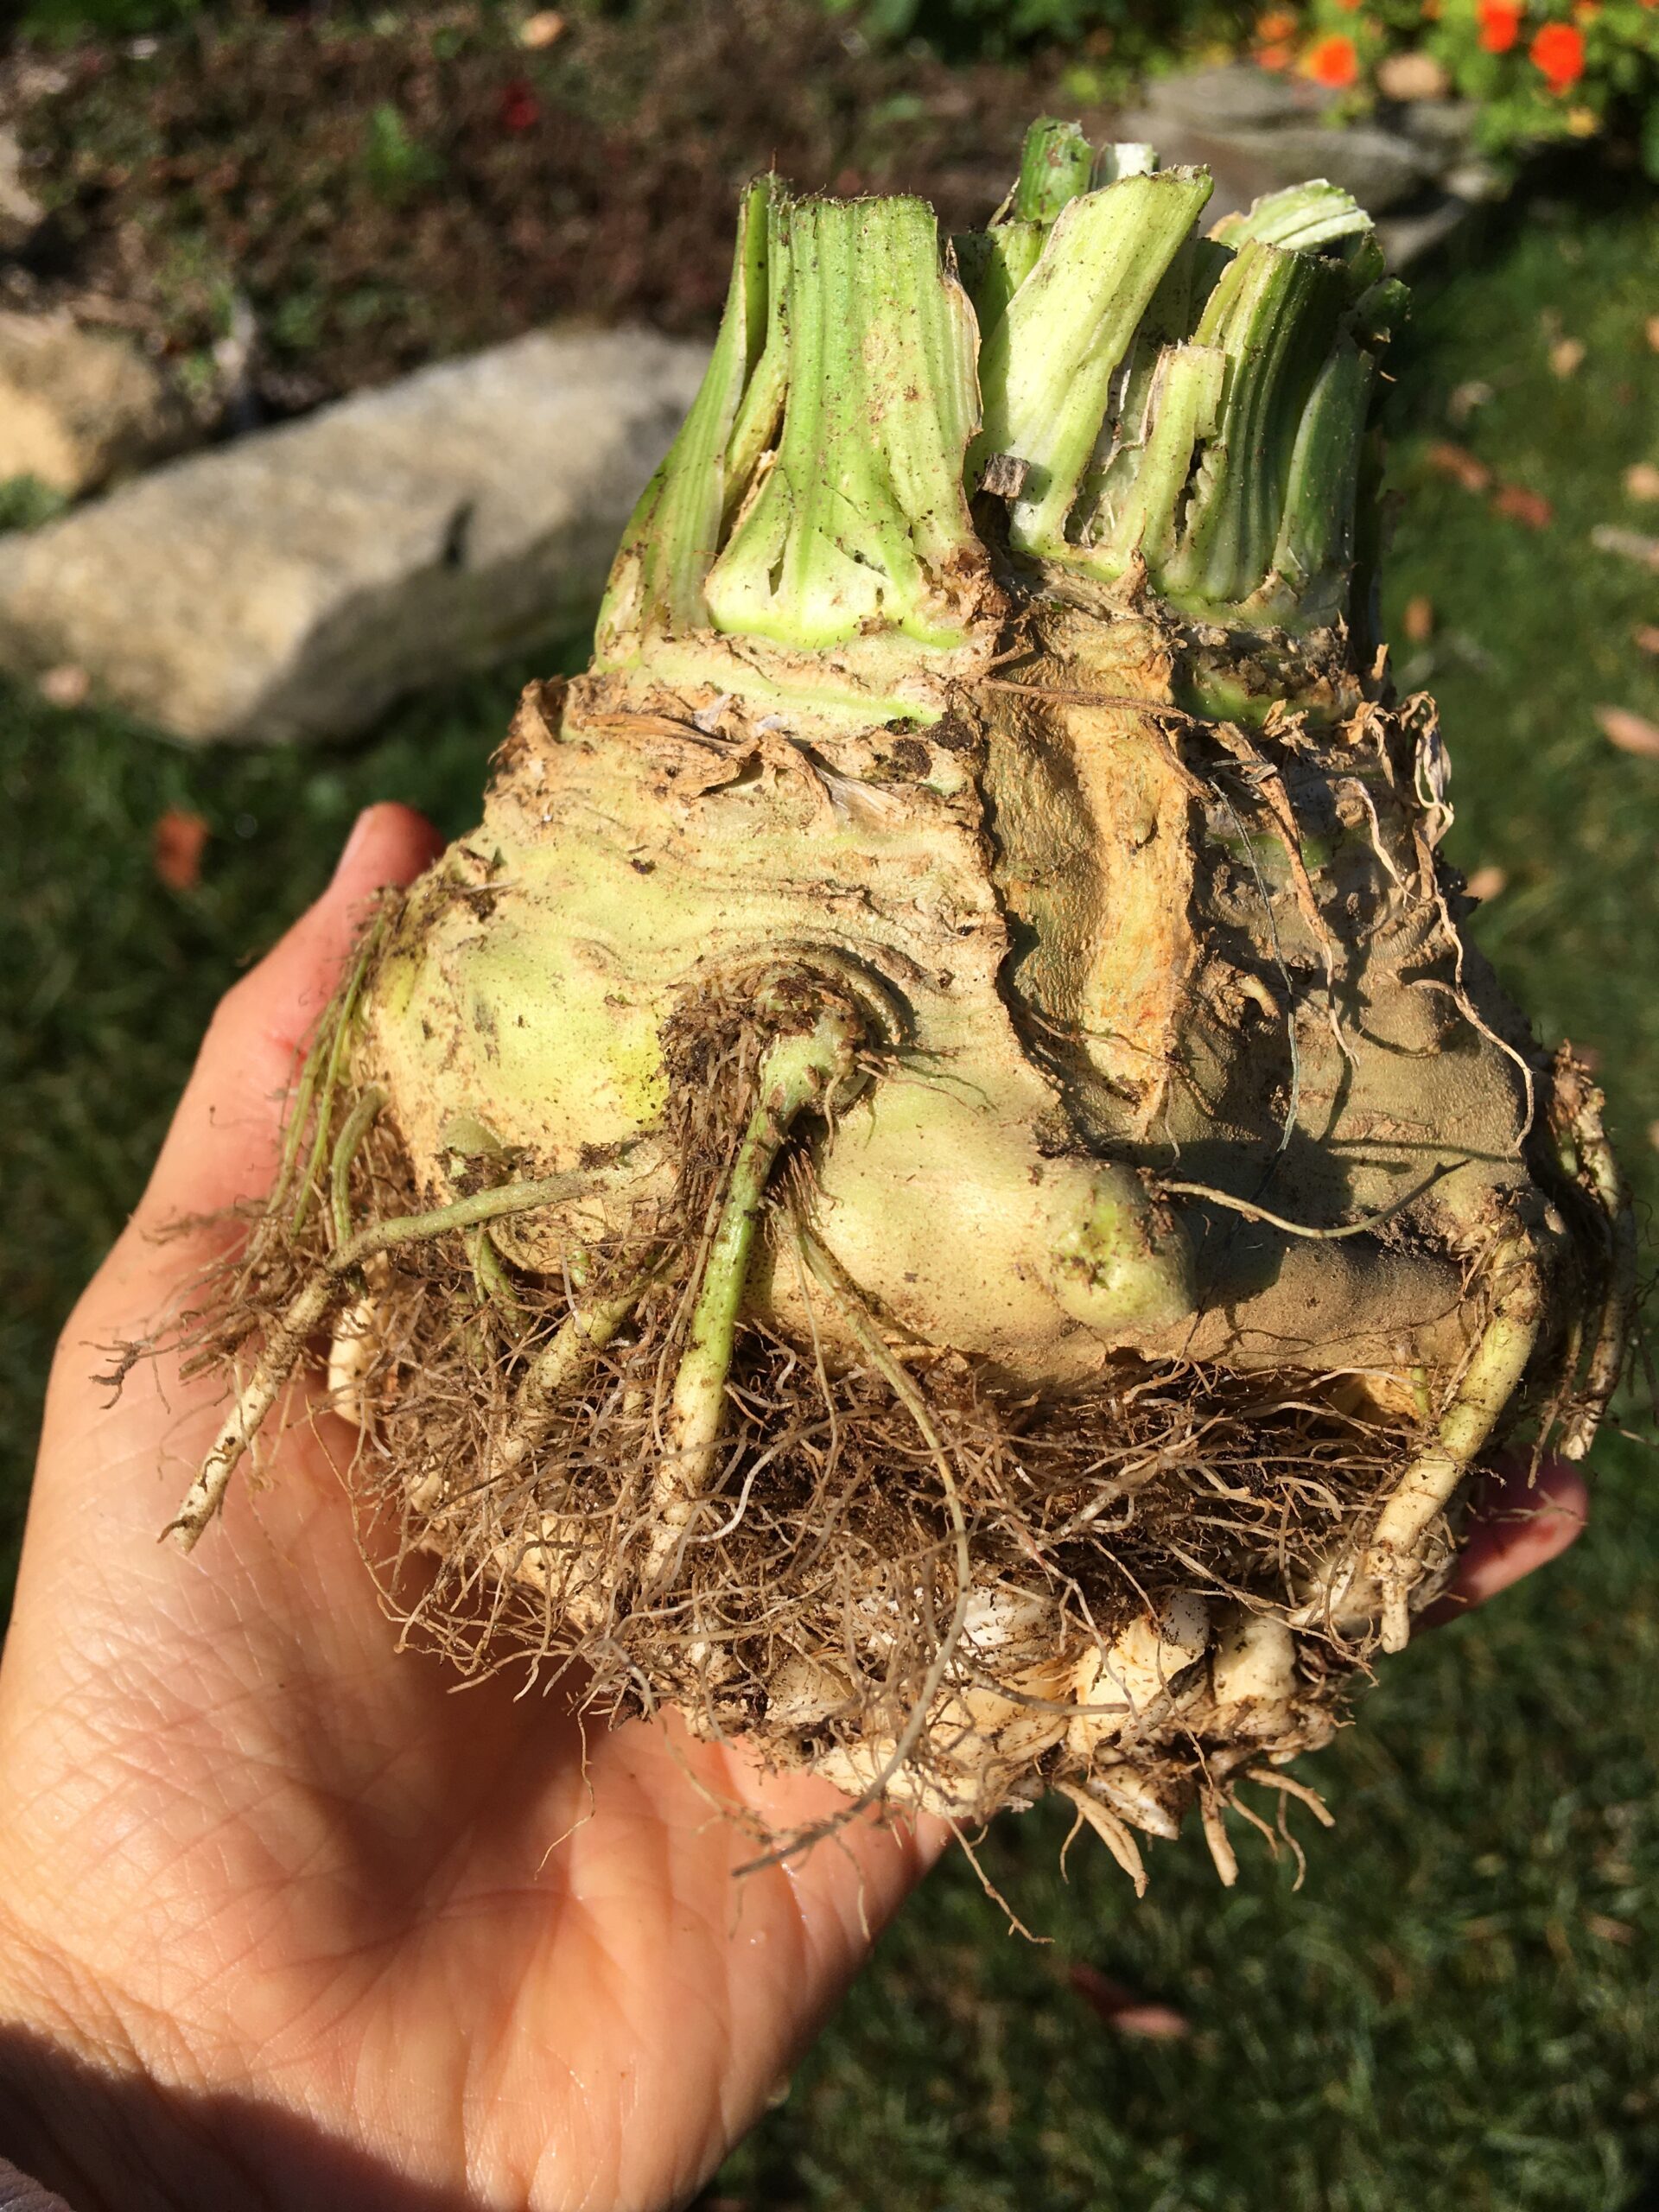 Featured image for “Celeriac – Celery Root”